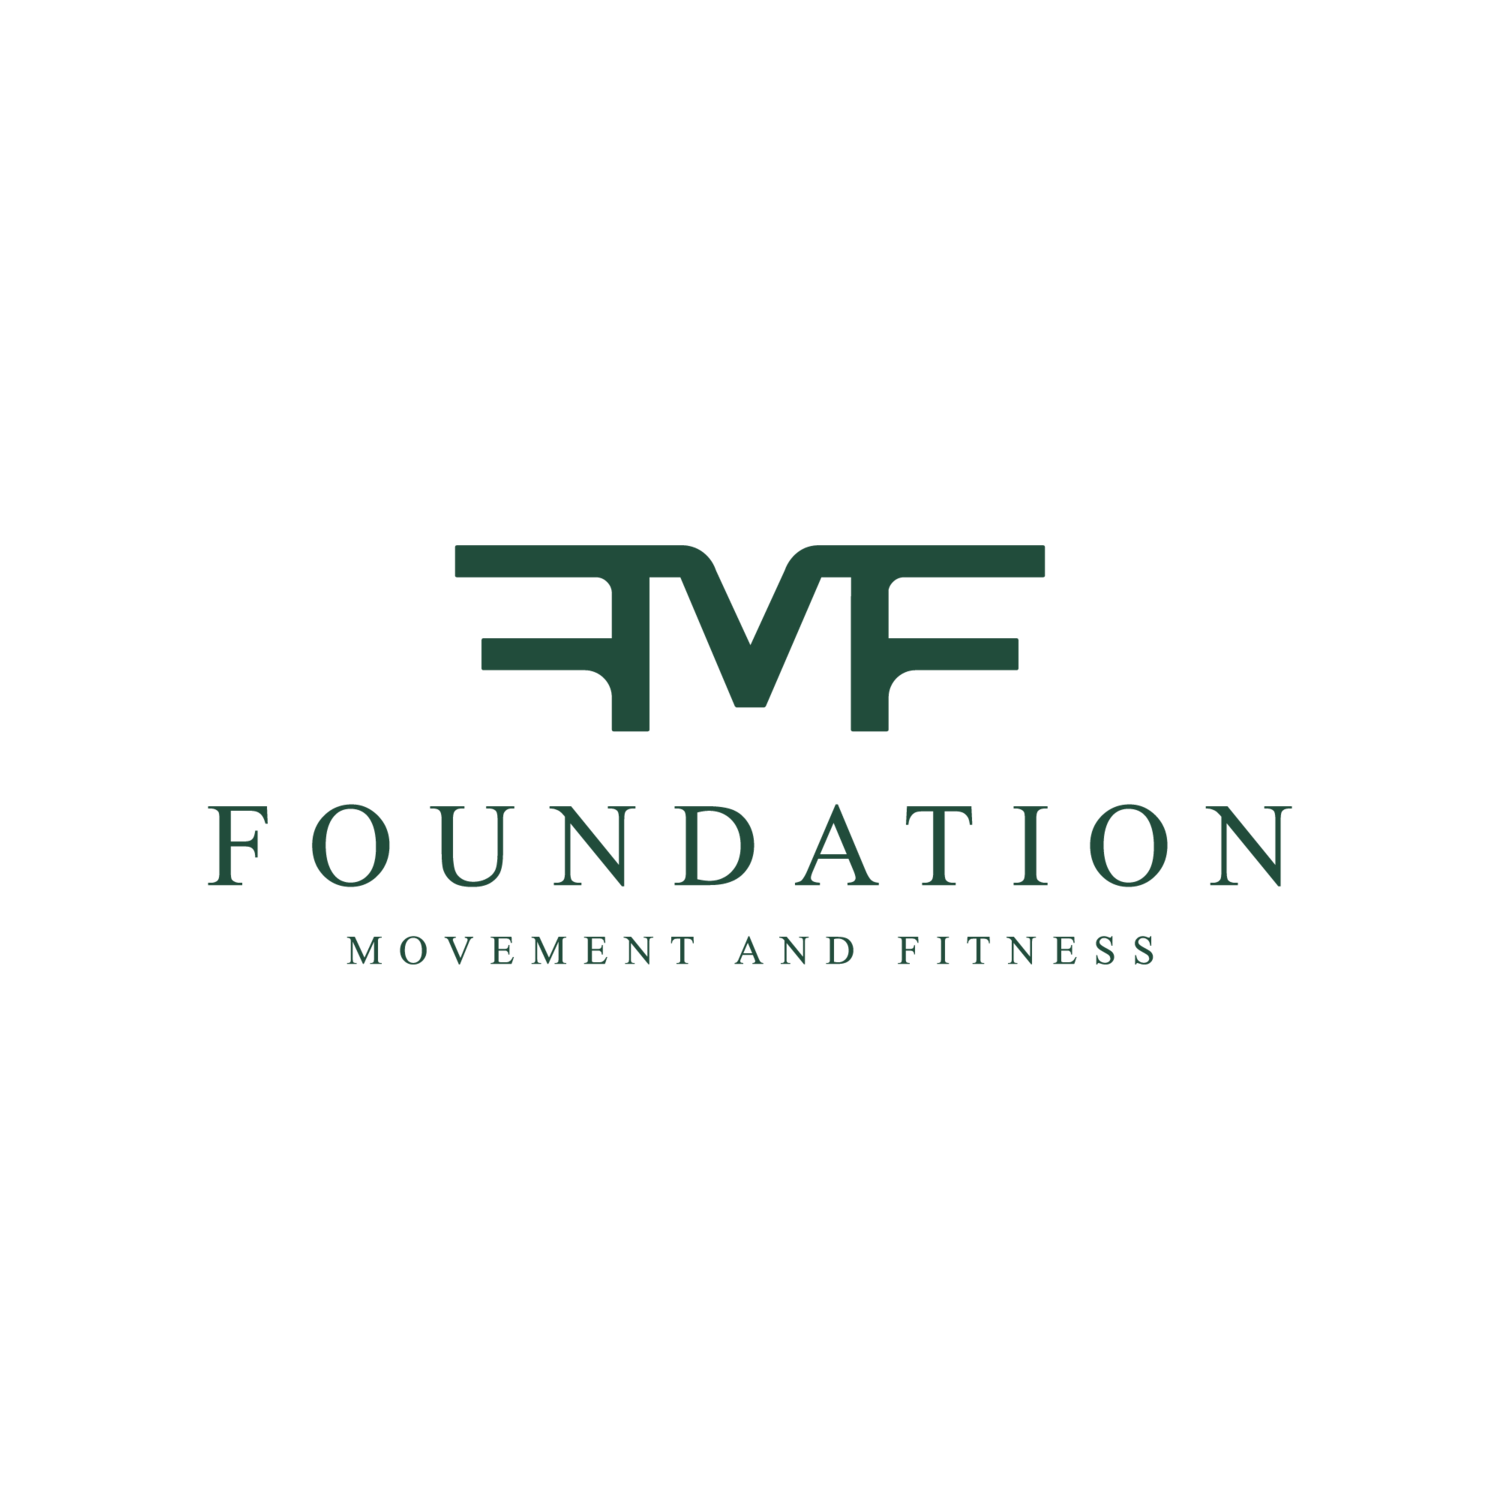 Foundation Movement & Fitness